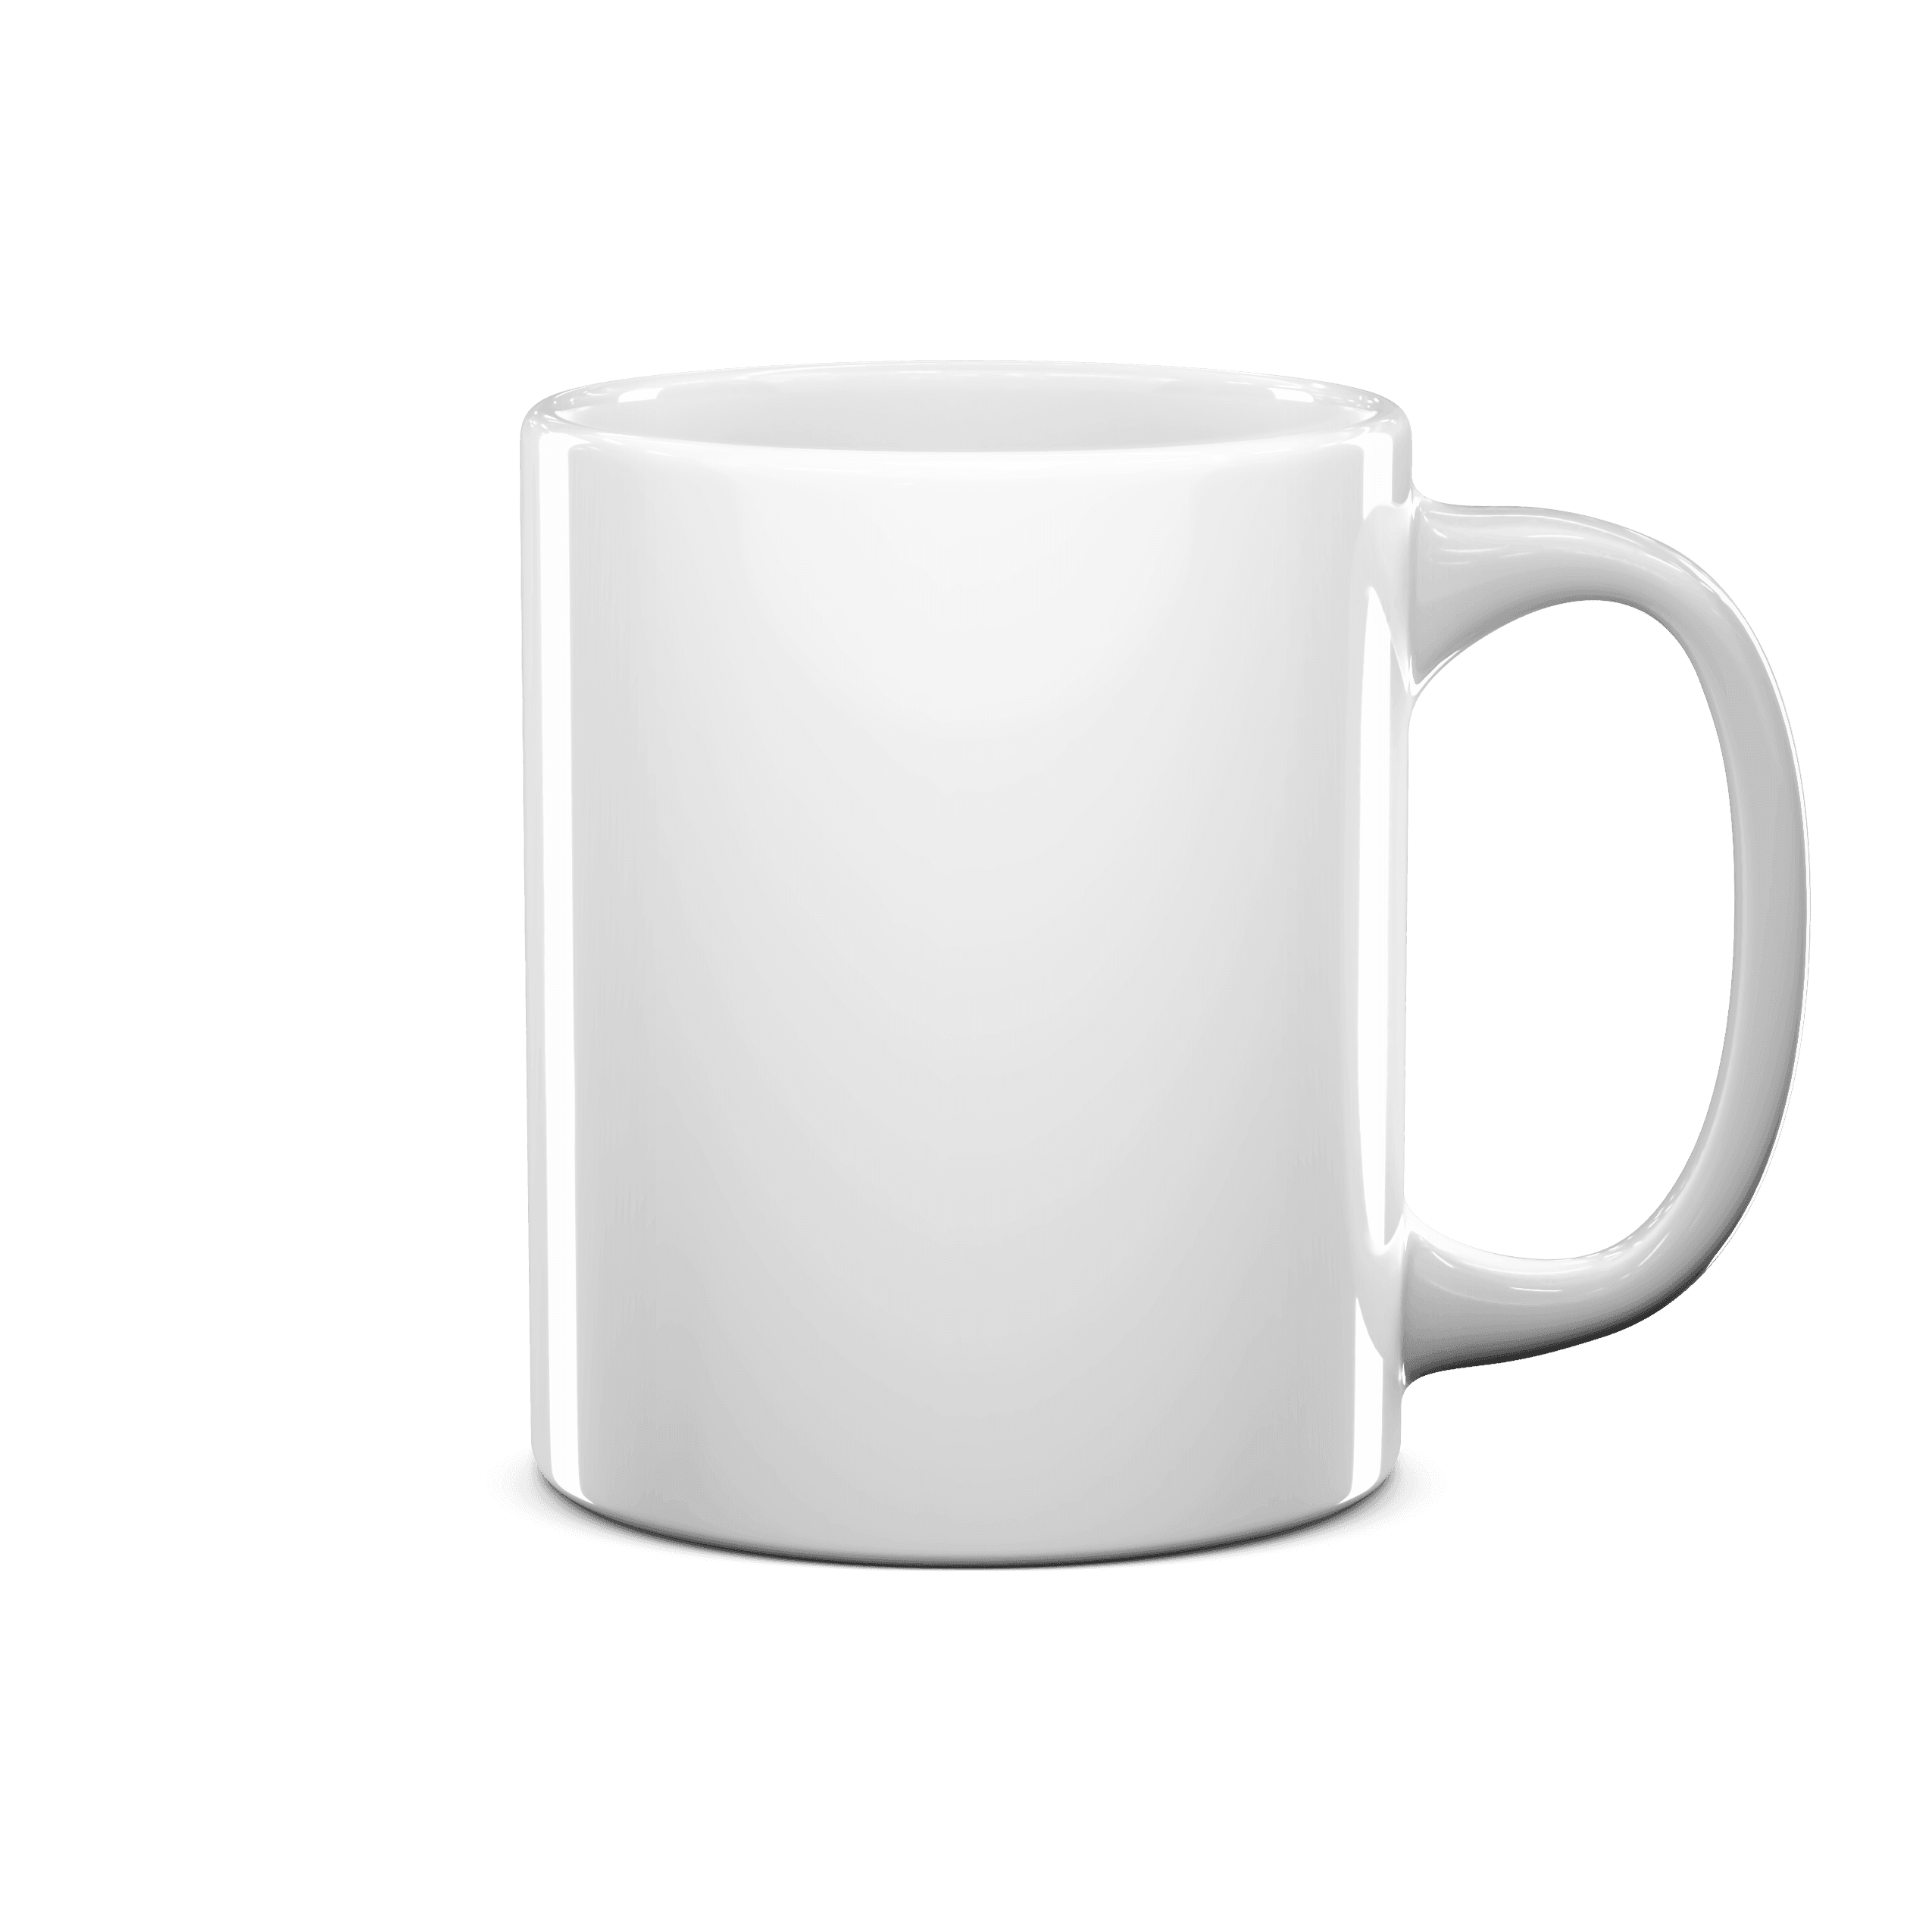 Professional Pot Stirrer Color Morphing Mug, 11oz 